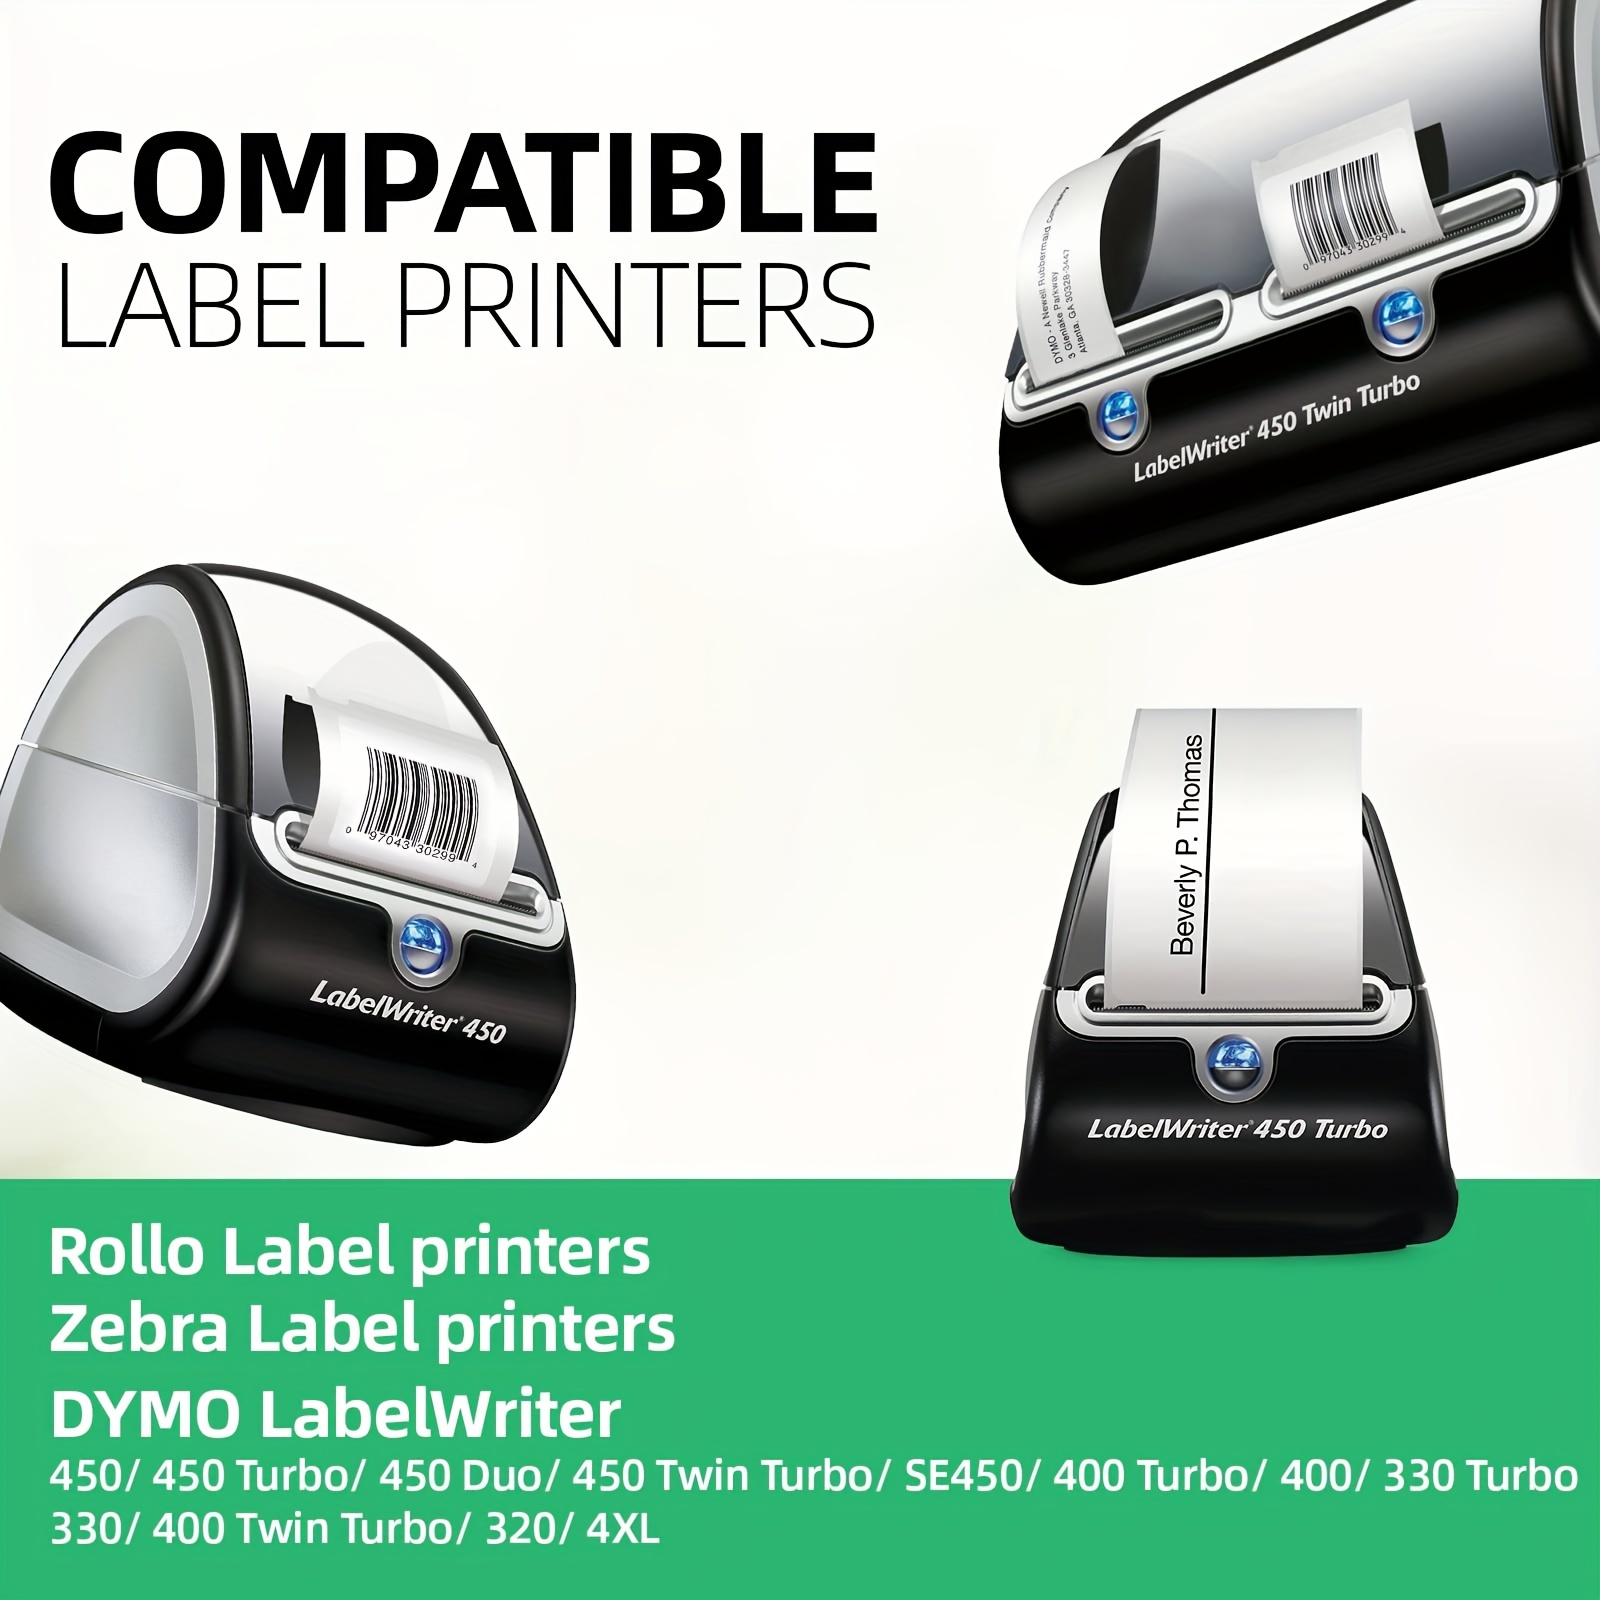 LabelValue.com | Dymo 30252 Address Labels - (1-1/8 x 3-1/2) for Dymo  450, 4XL, Zebra Desktop Printers - 2 White Rolls Per Pack